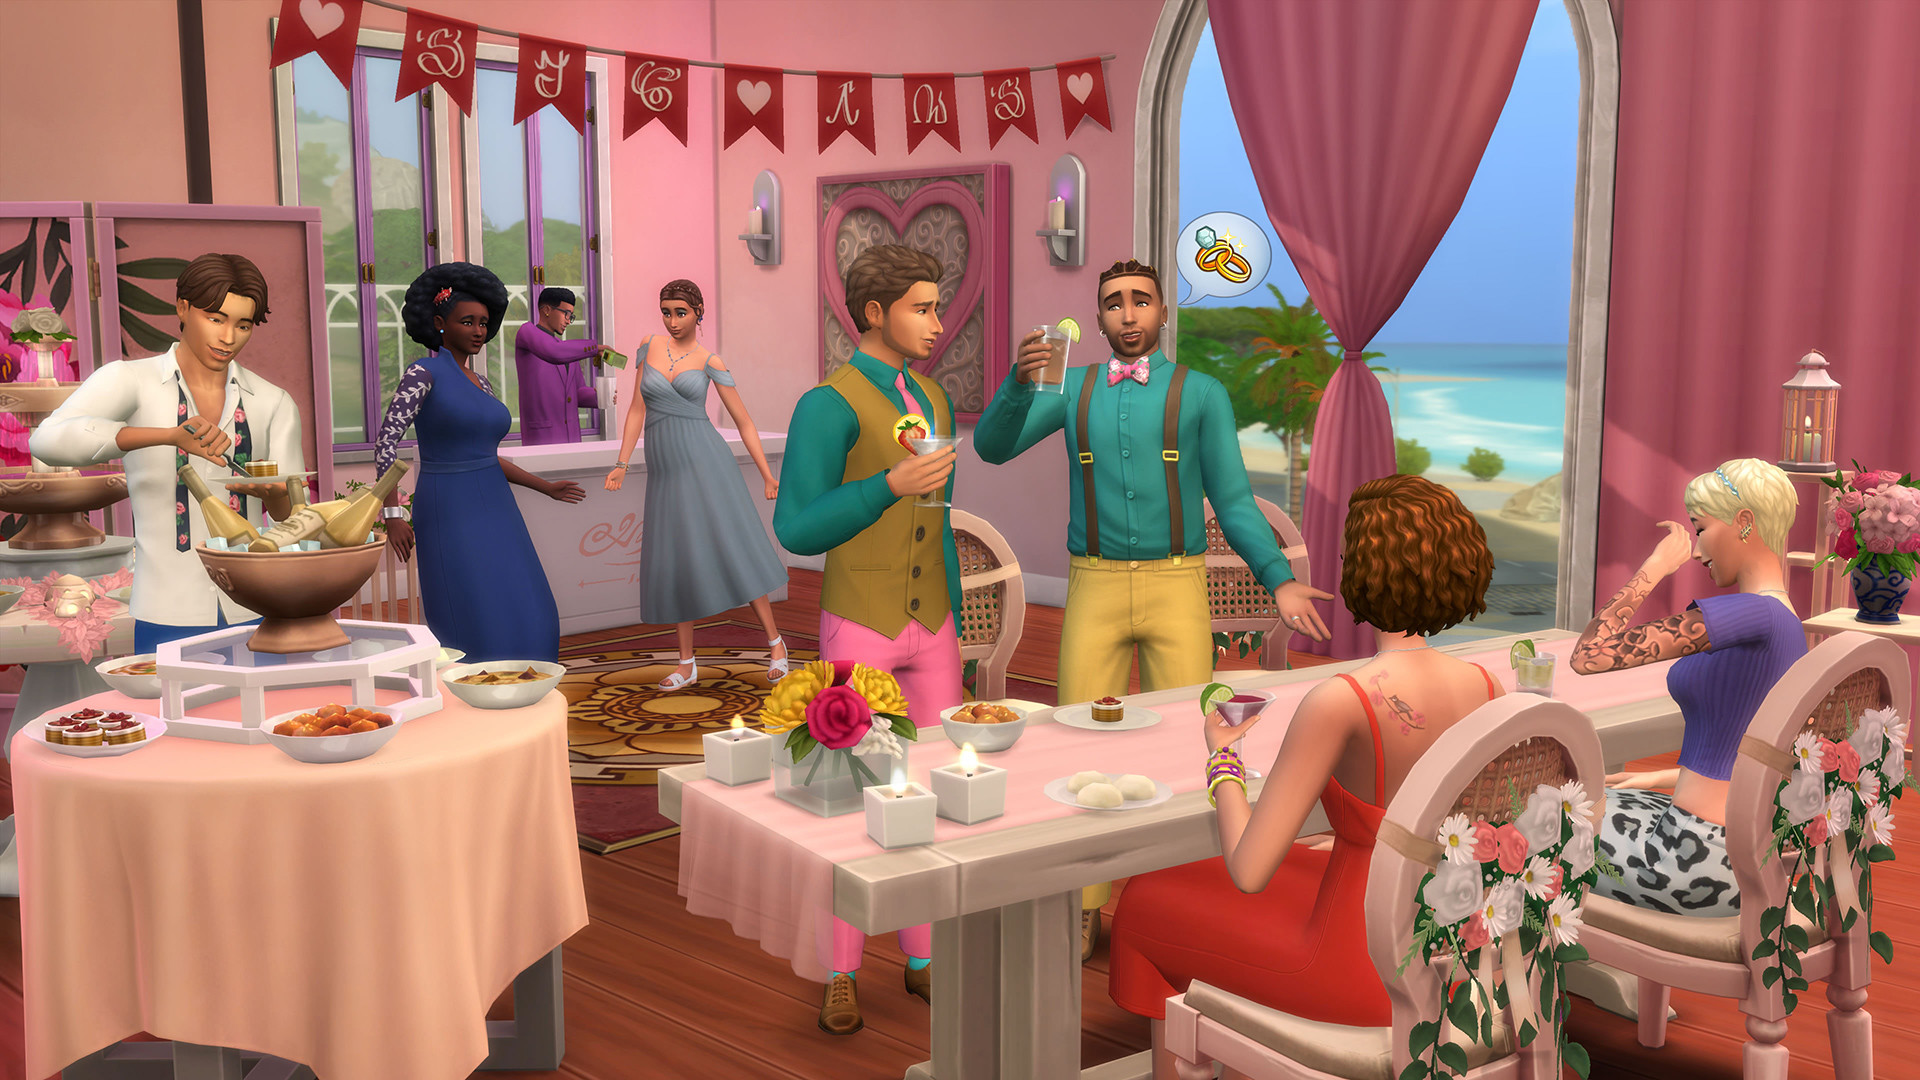 The Sims 4 - My Wedding Stories Game Pack DLC Origin CD Key 18.07 usd